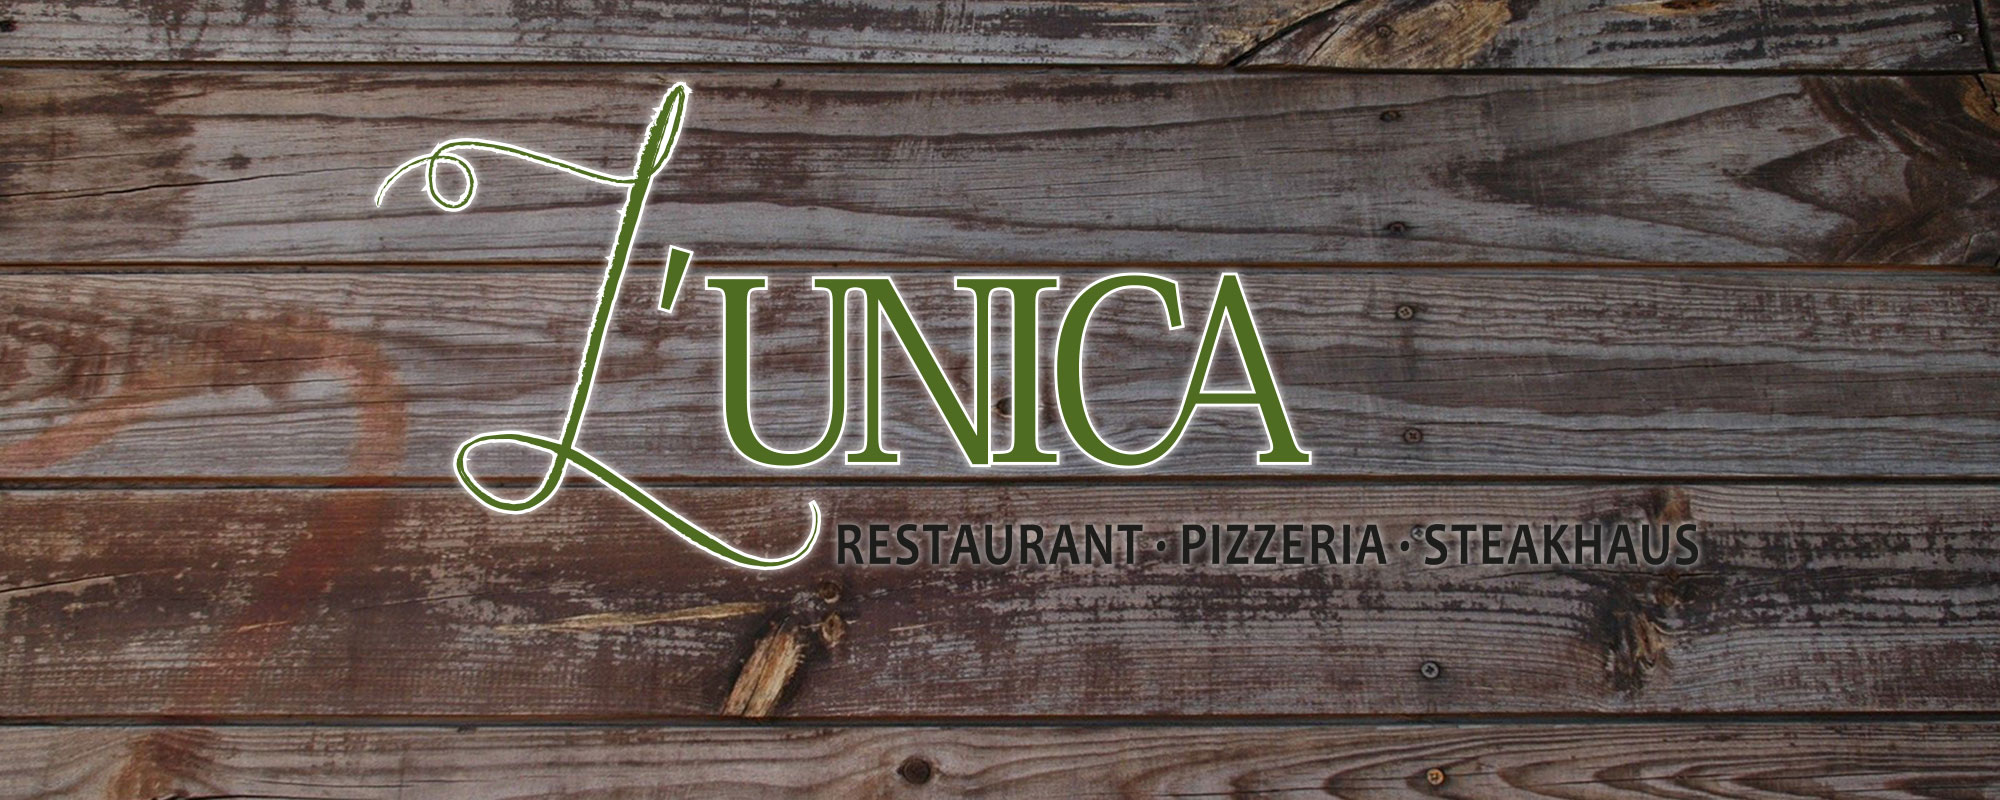 L'unica Restaurant: Restaurant, Pizzeria, Steakhouse in Leinfelden-Echterdingen